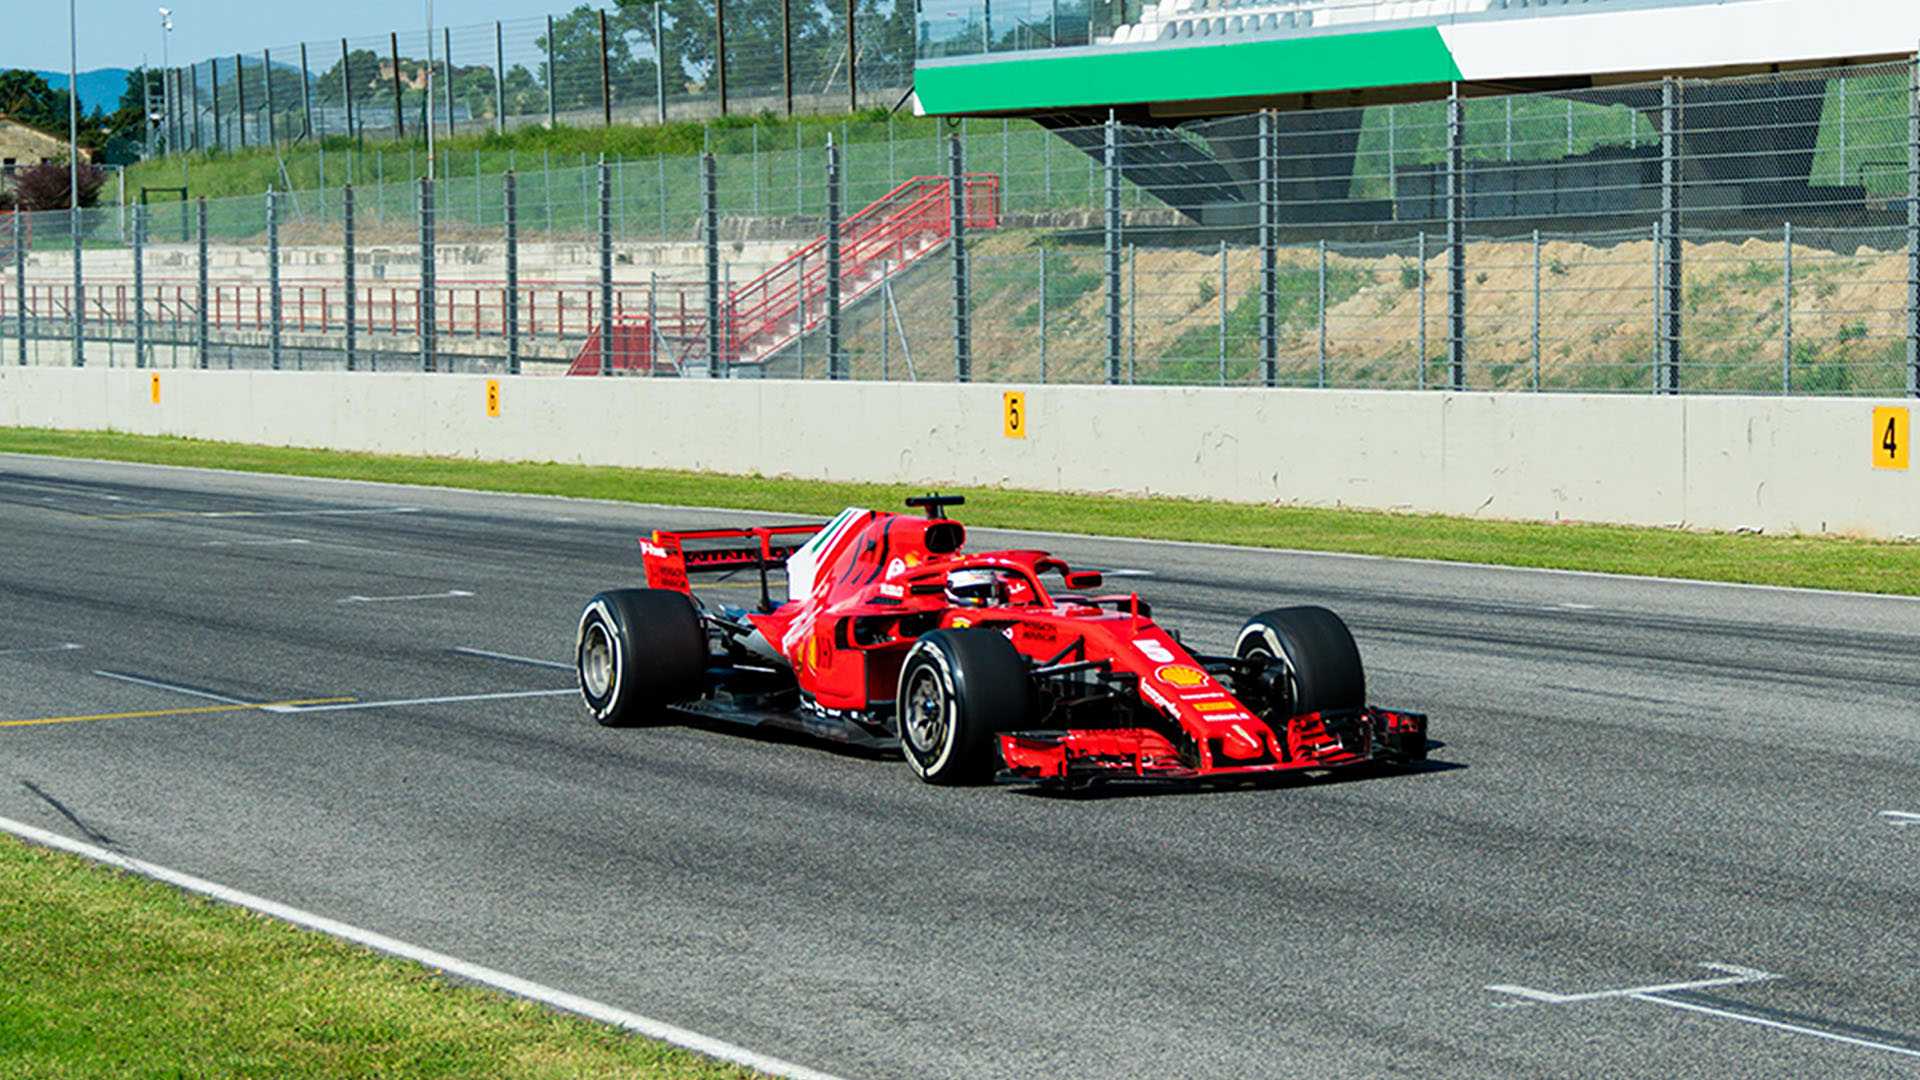 REGARDER: Un tour du circuit délicat du Mugello avec Ferrari